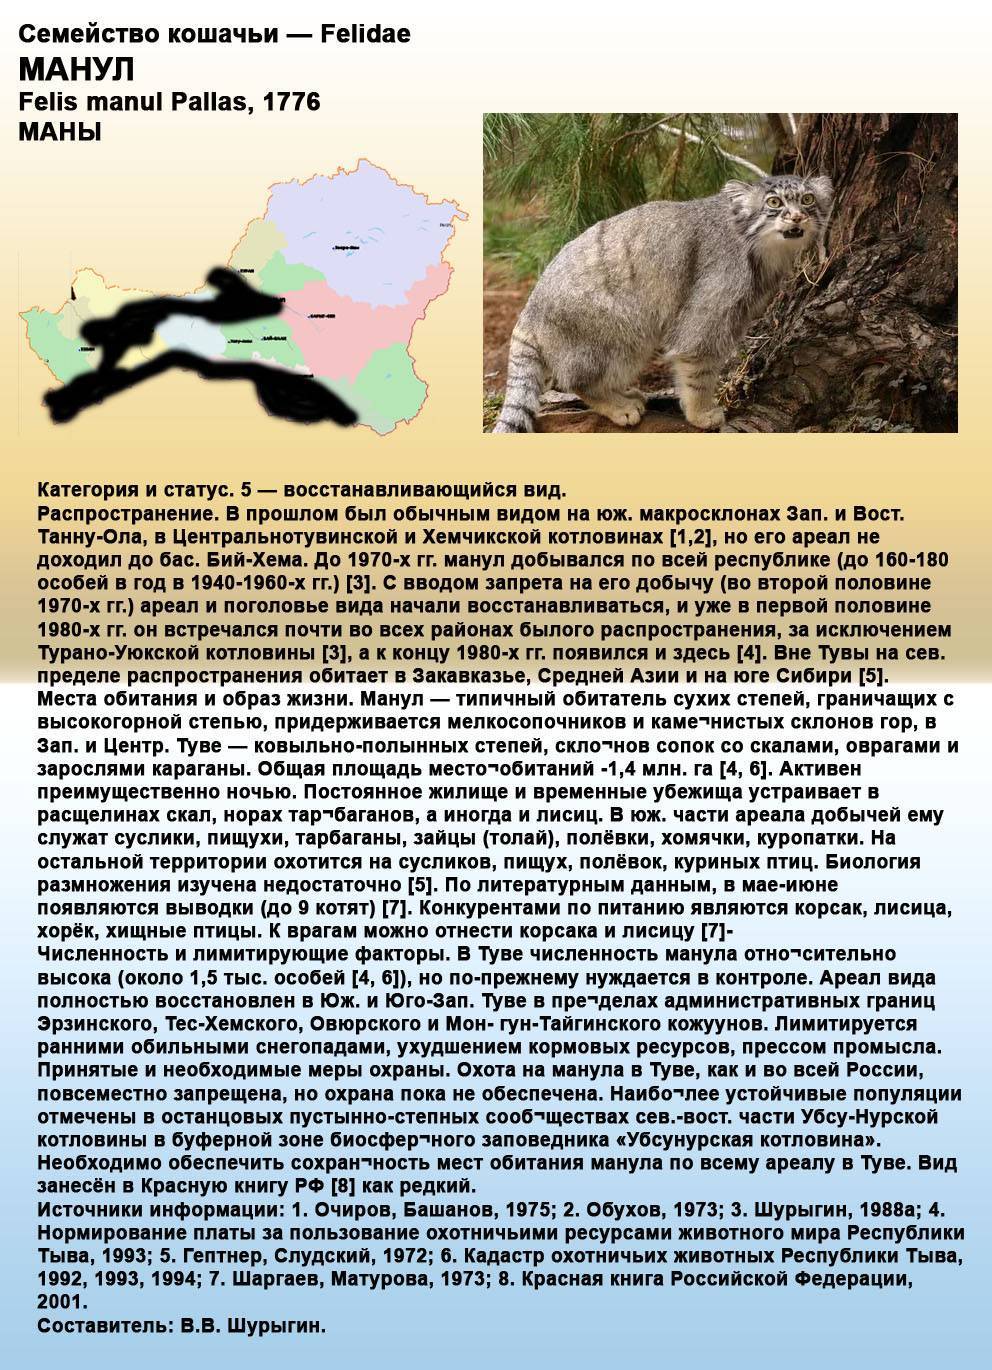 Ржавая кошка: описание внешности, характер, среда обитания и образ жизни, фото